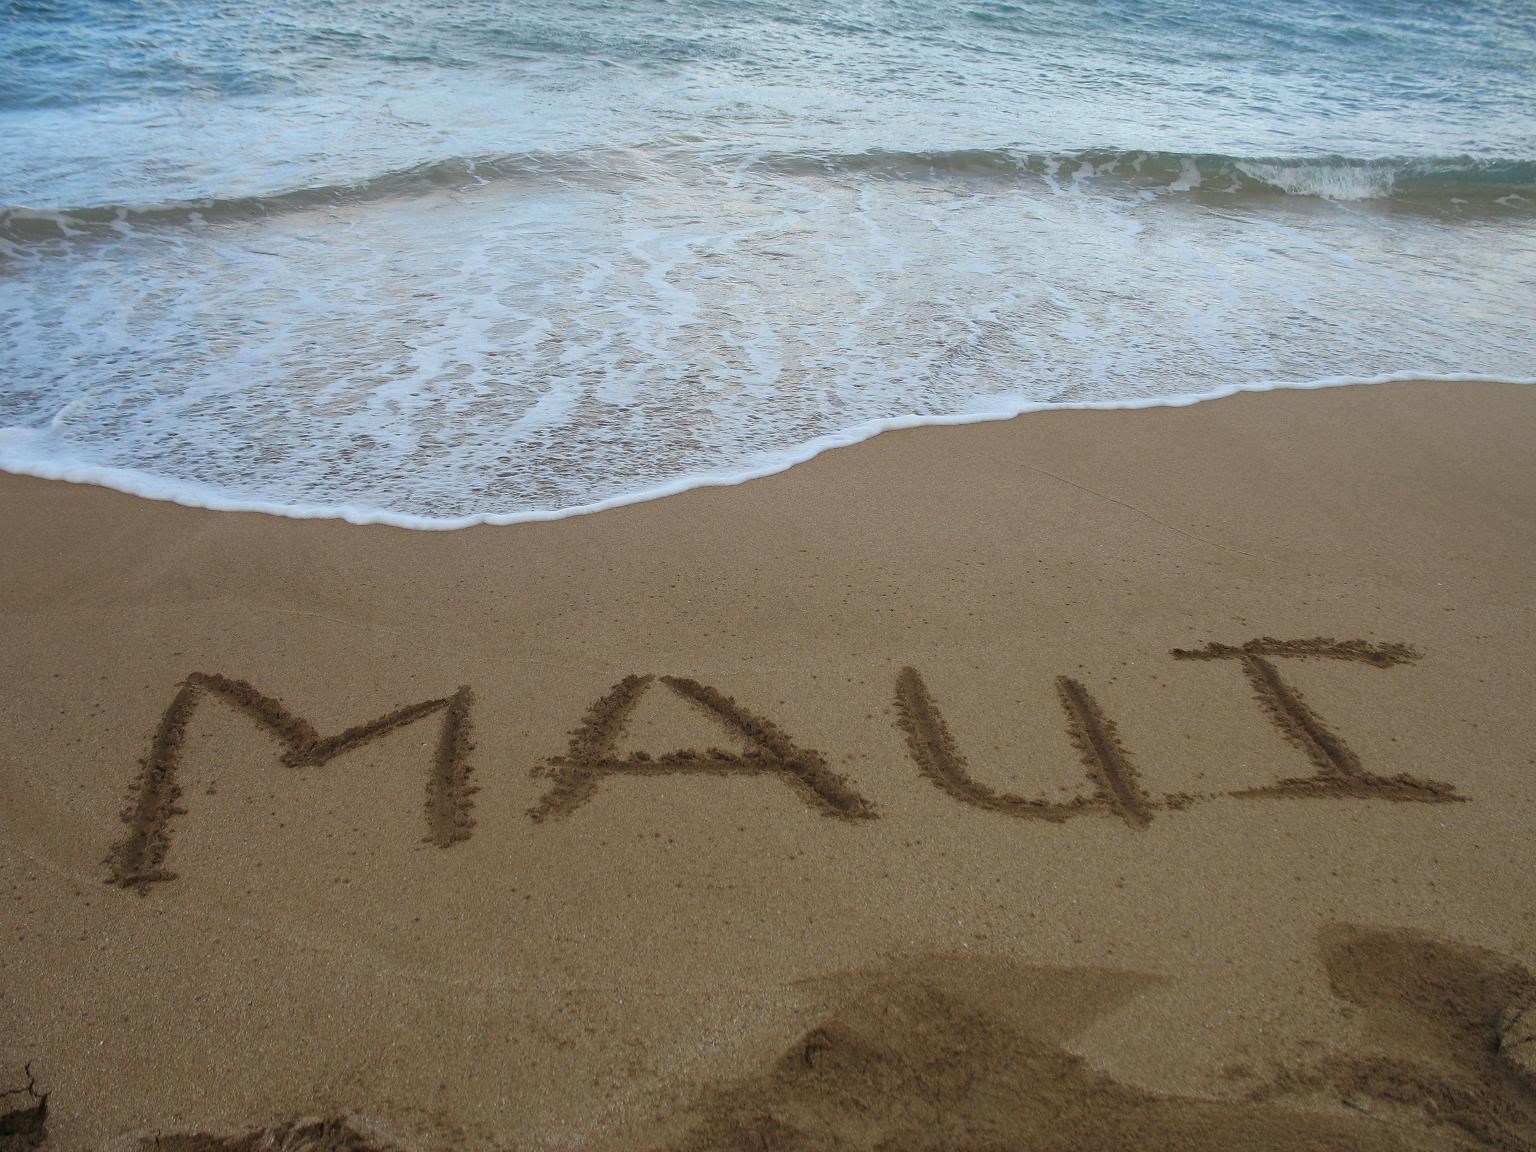 Maui - Hawaii